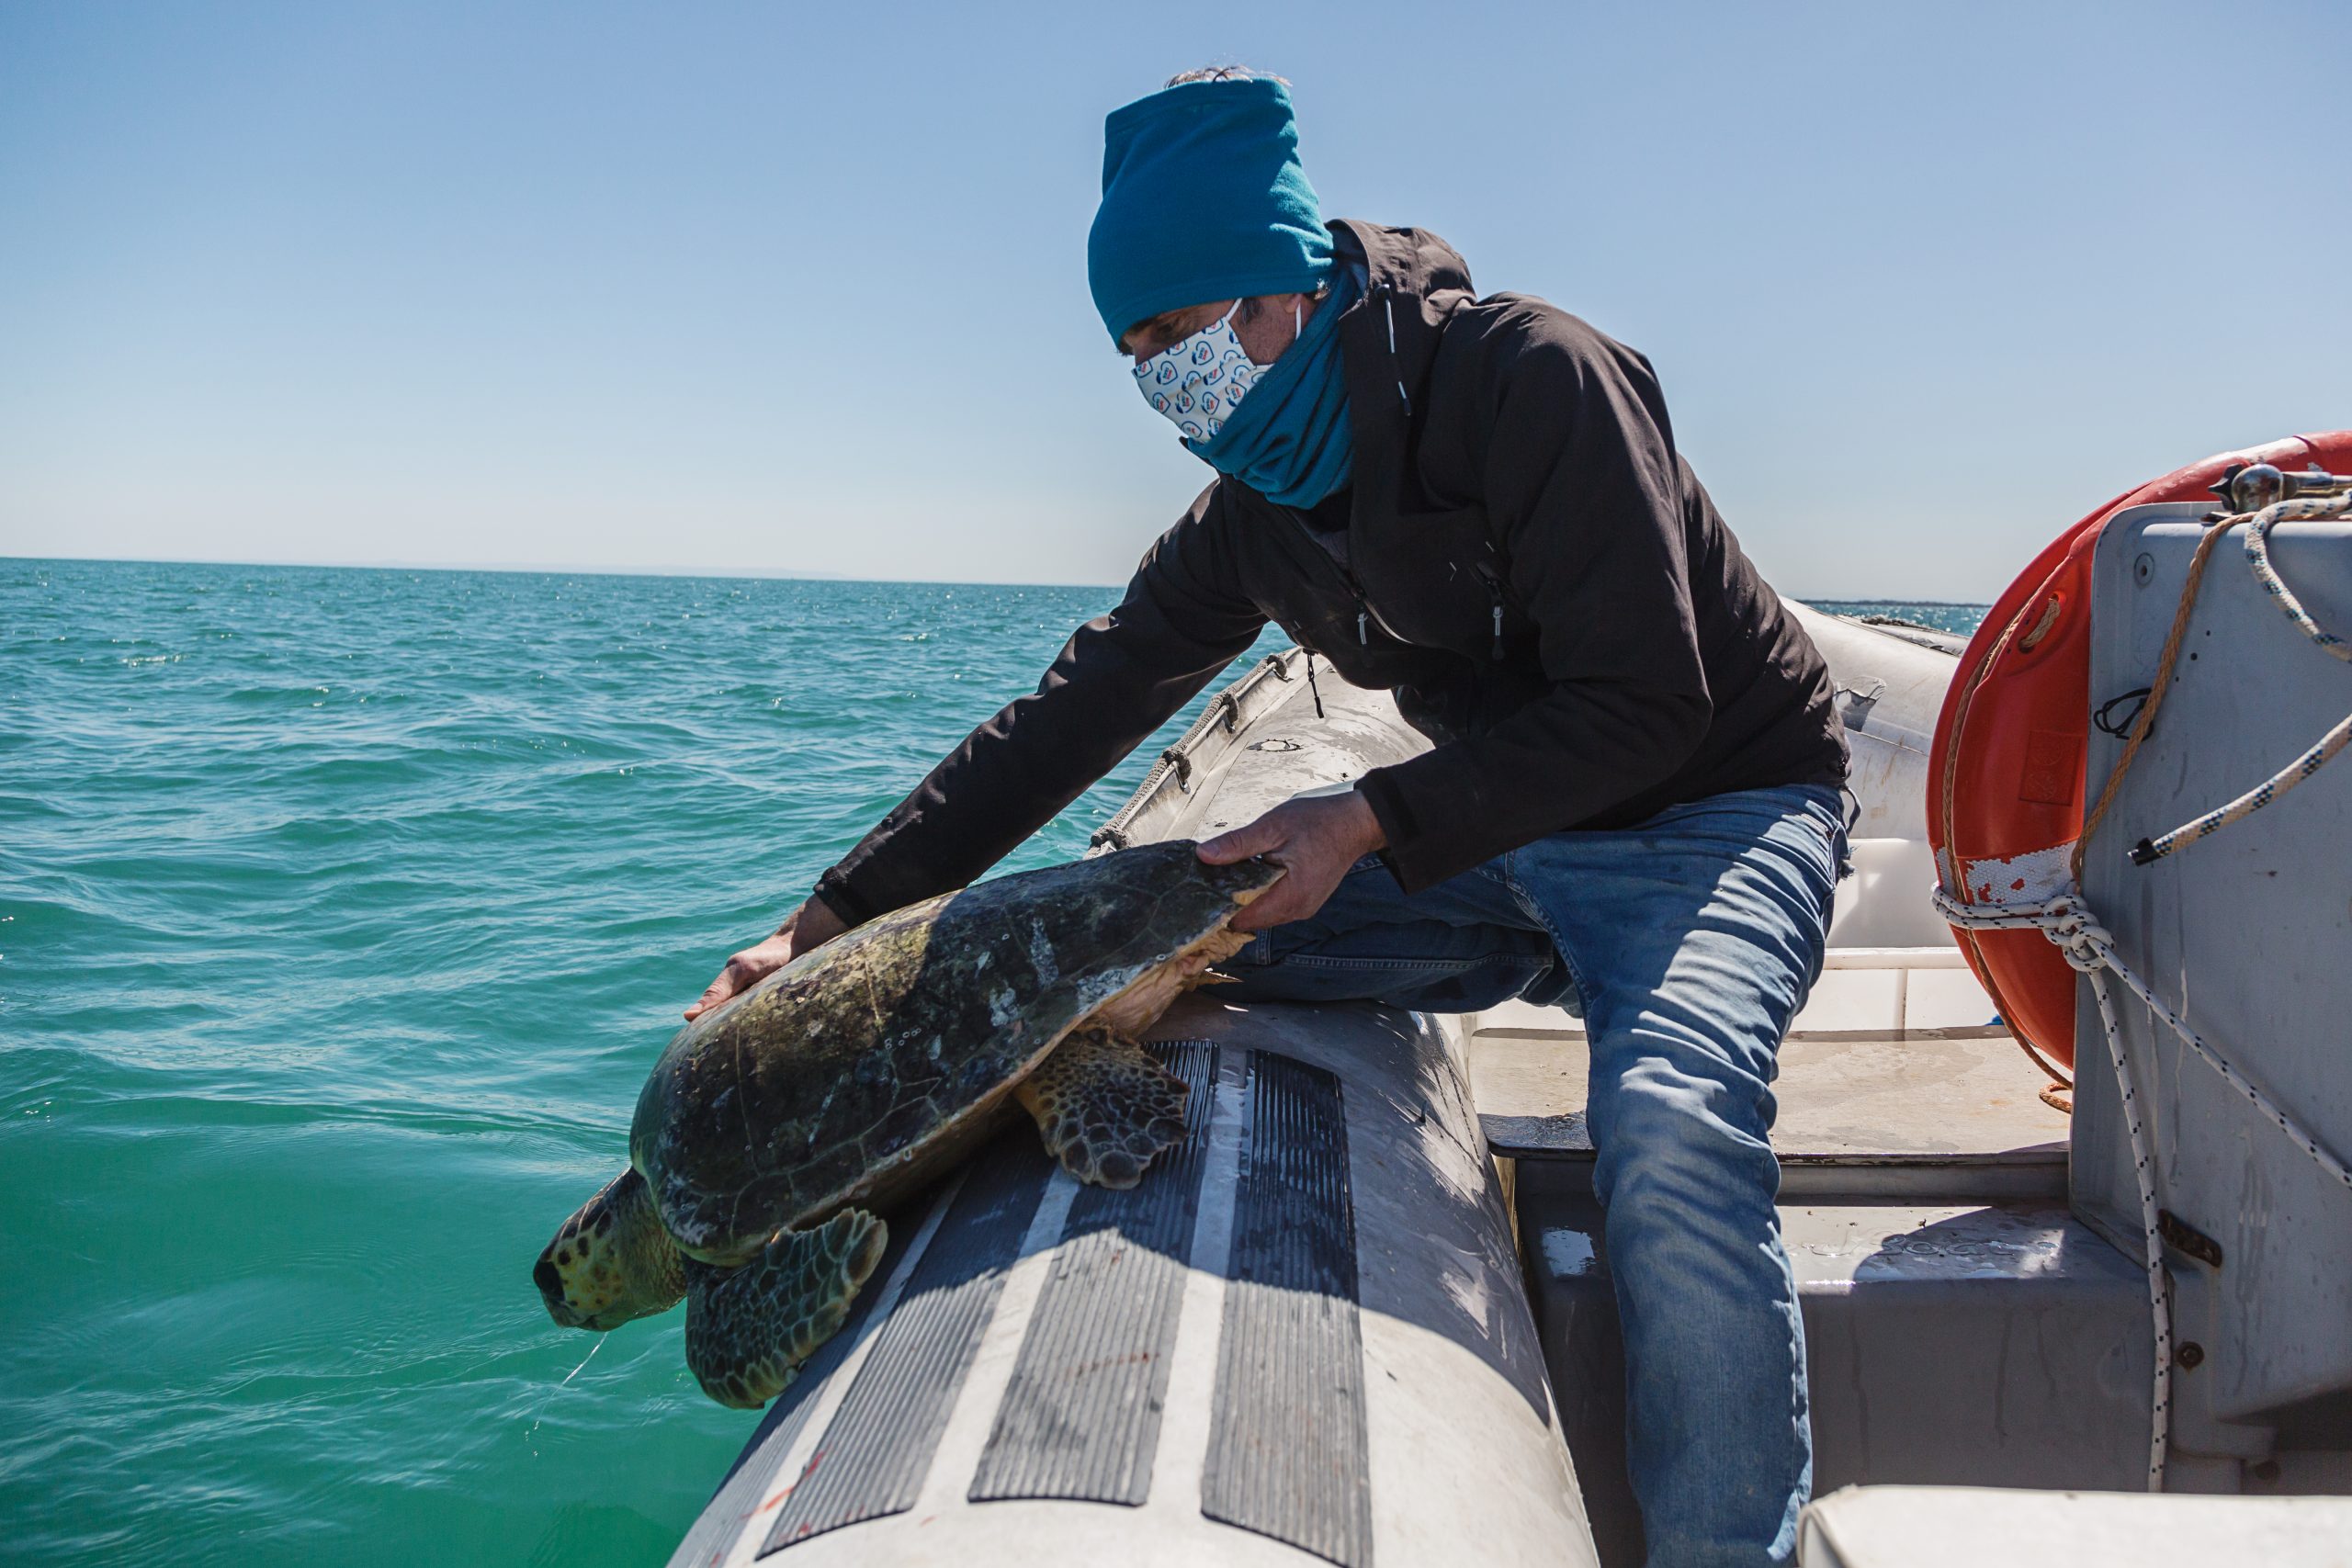 Manfredonia, Golfo - Giovanni Furii (Legambiente) libera in mare una tartaruga marina salvata da una cattura accidentale.